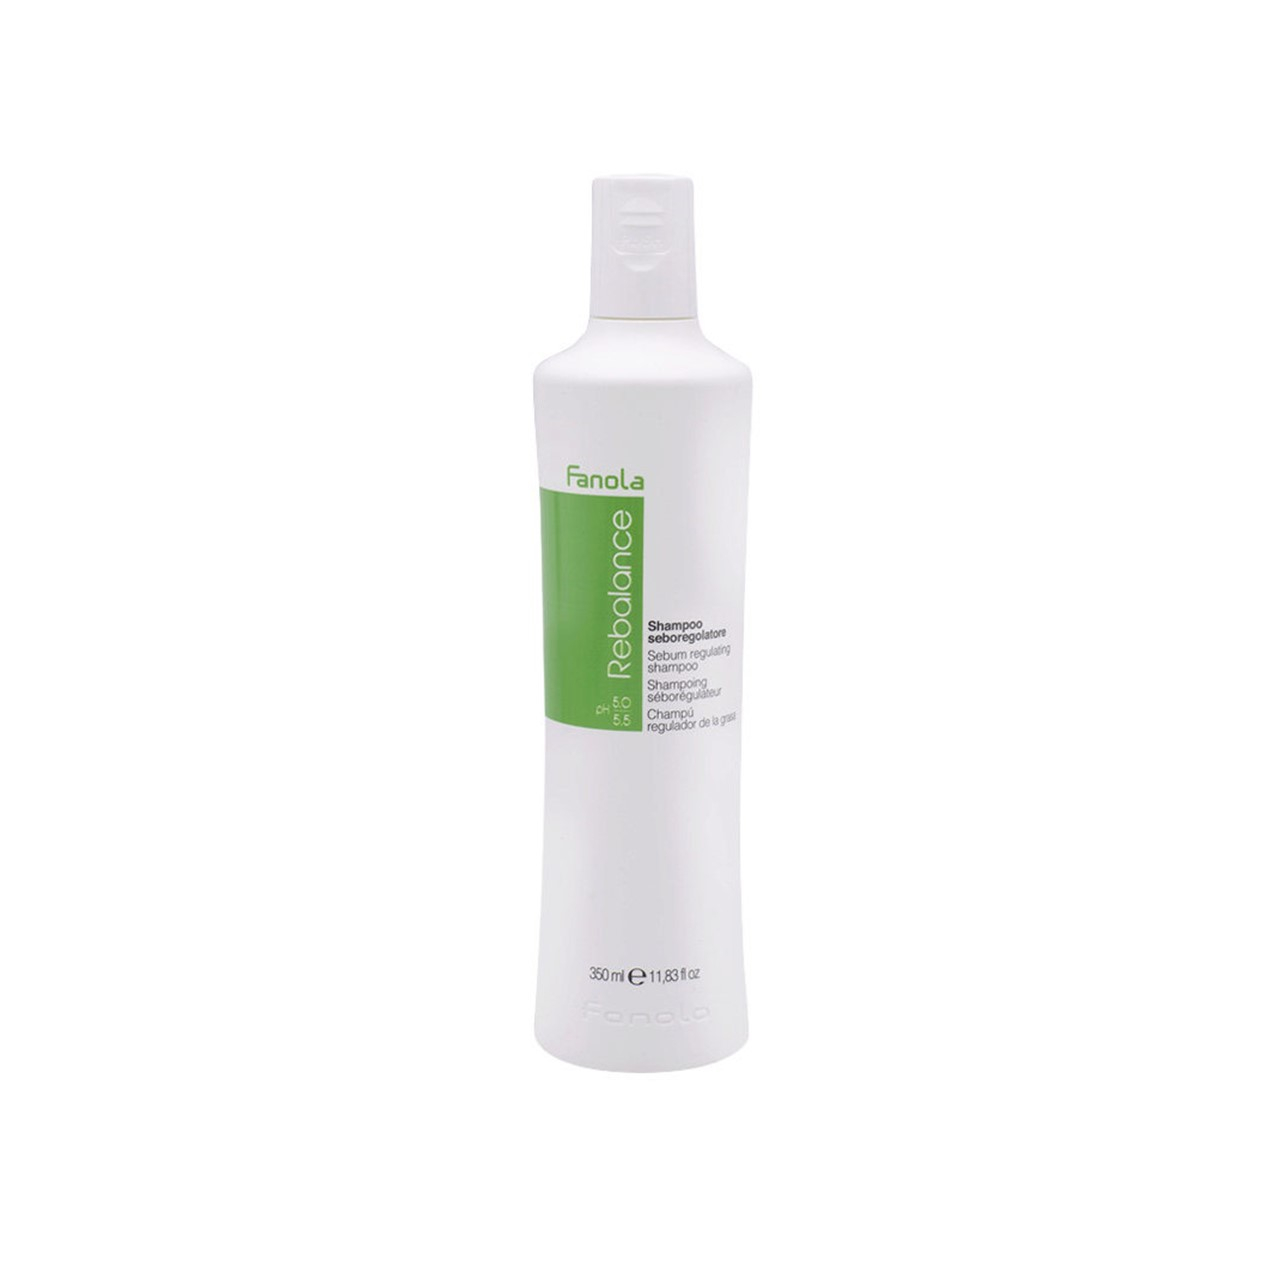 Fanola Rebalance Sebum Regulating Shampoo 350ml (11.83 fl oz)